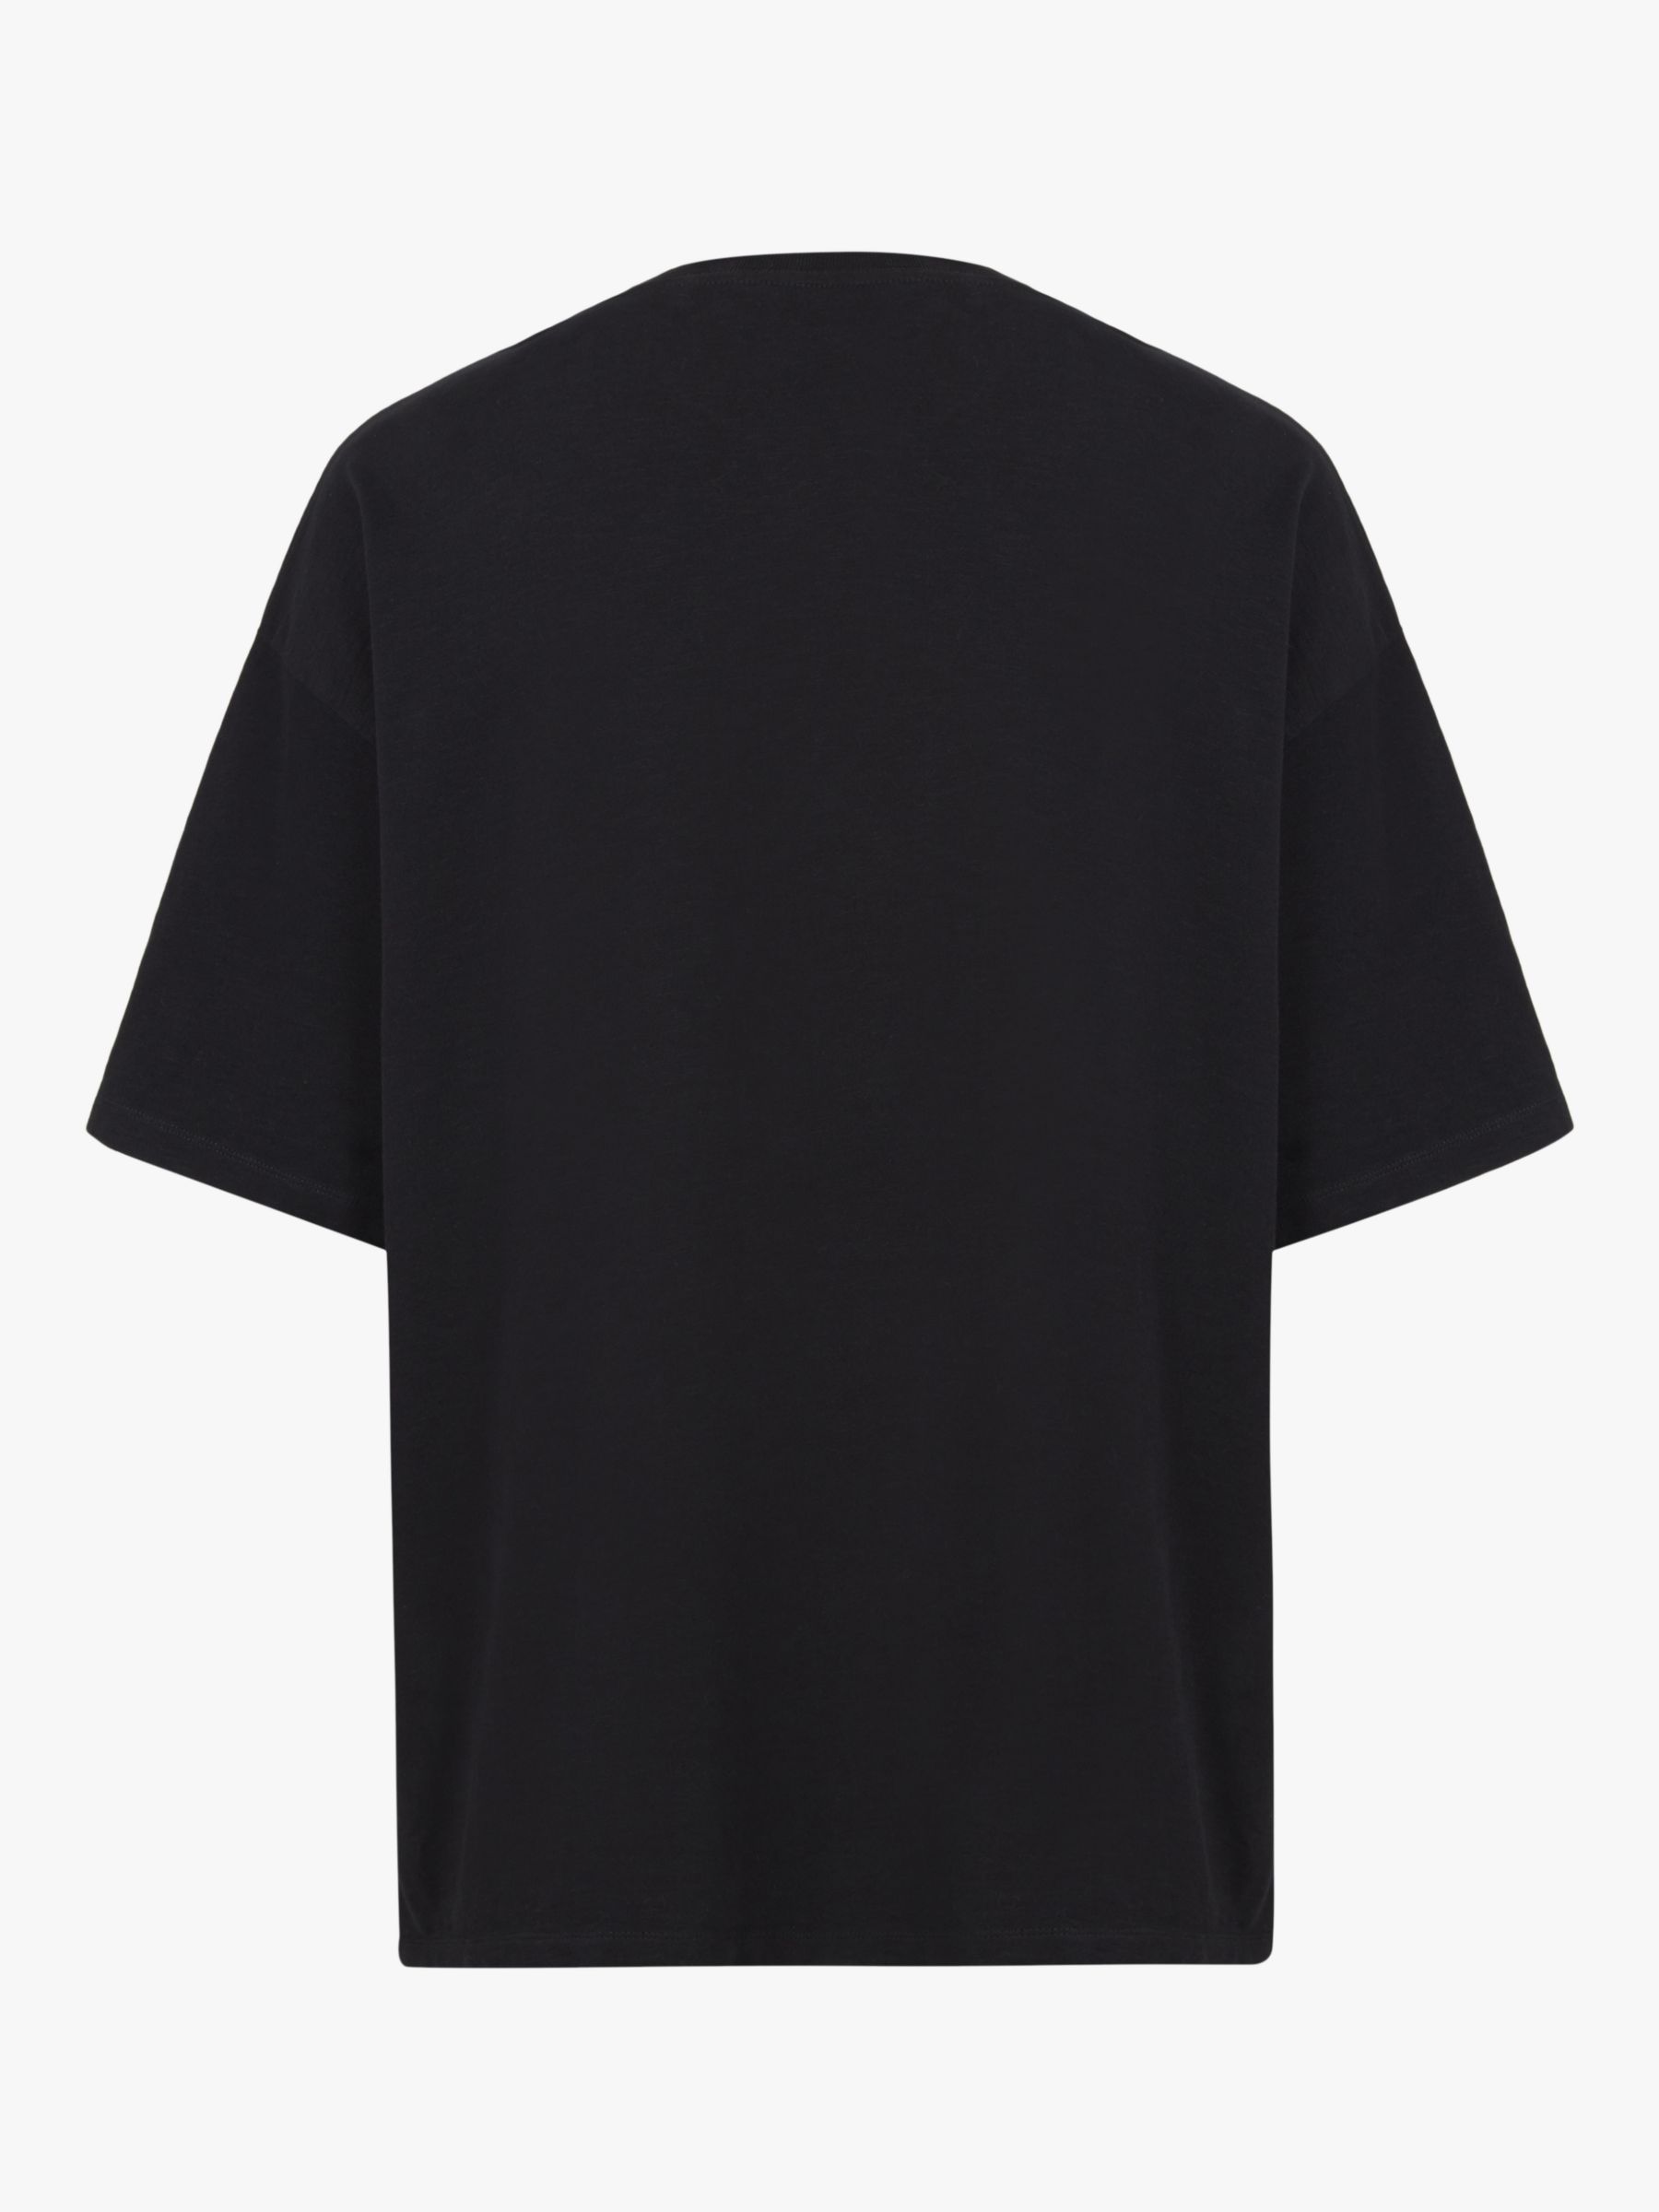 islanders black shirt